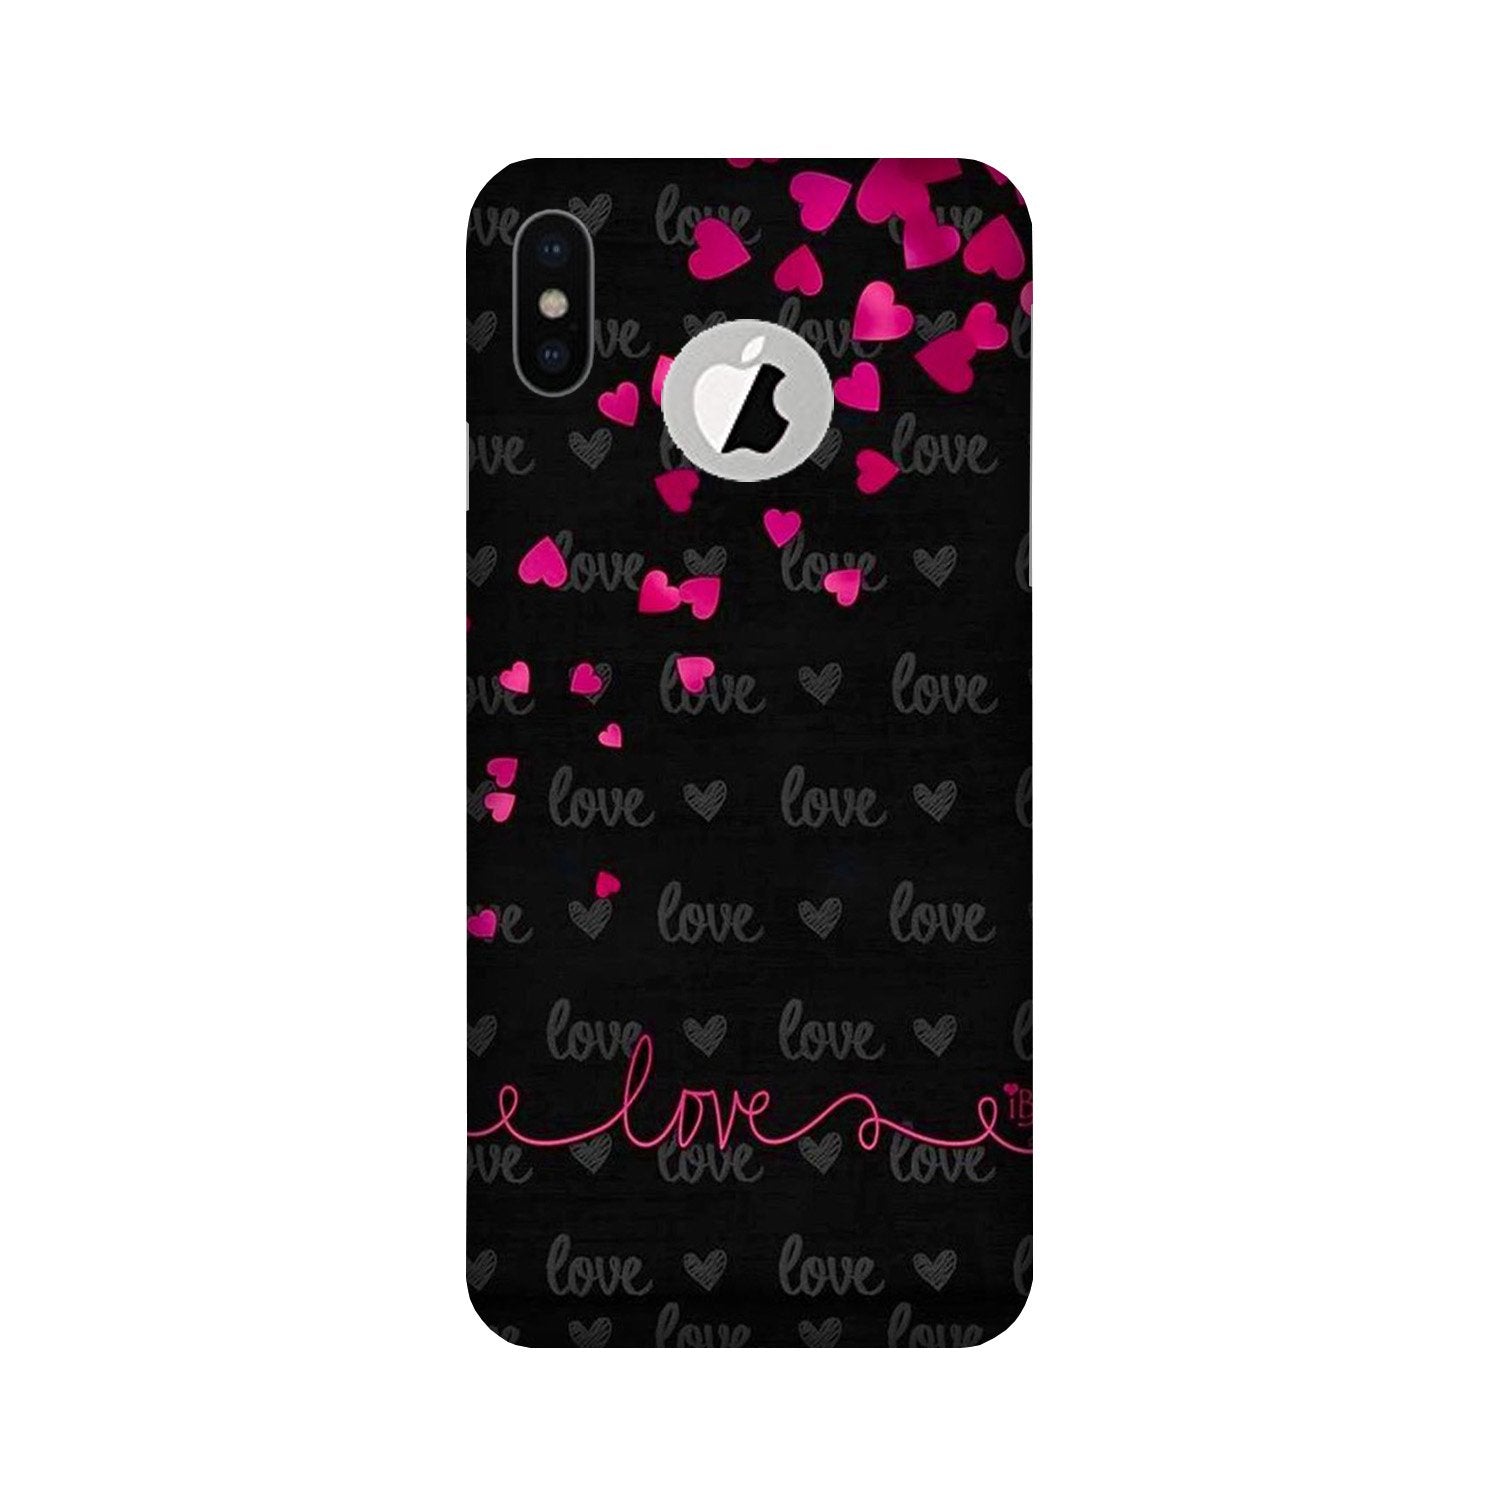 Love in Air Case for iPhone X logo cut